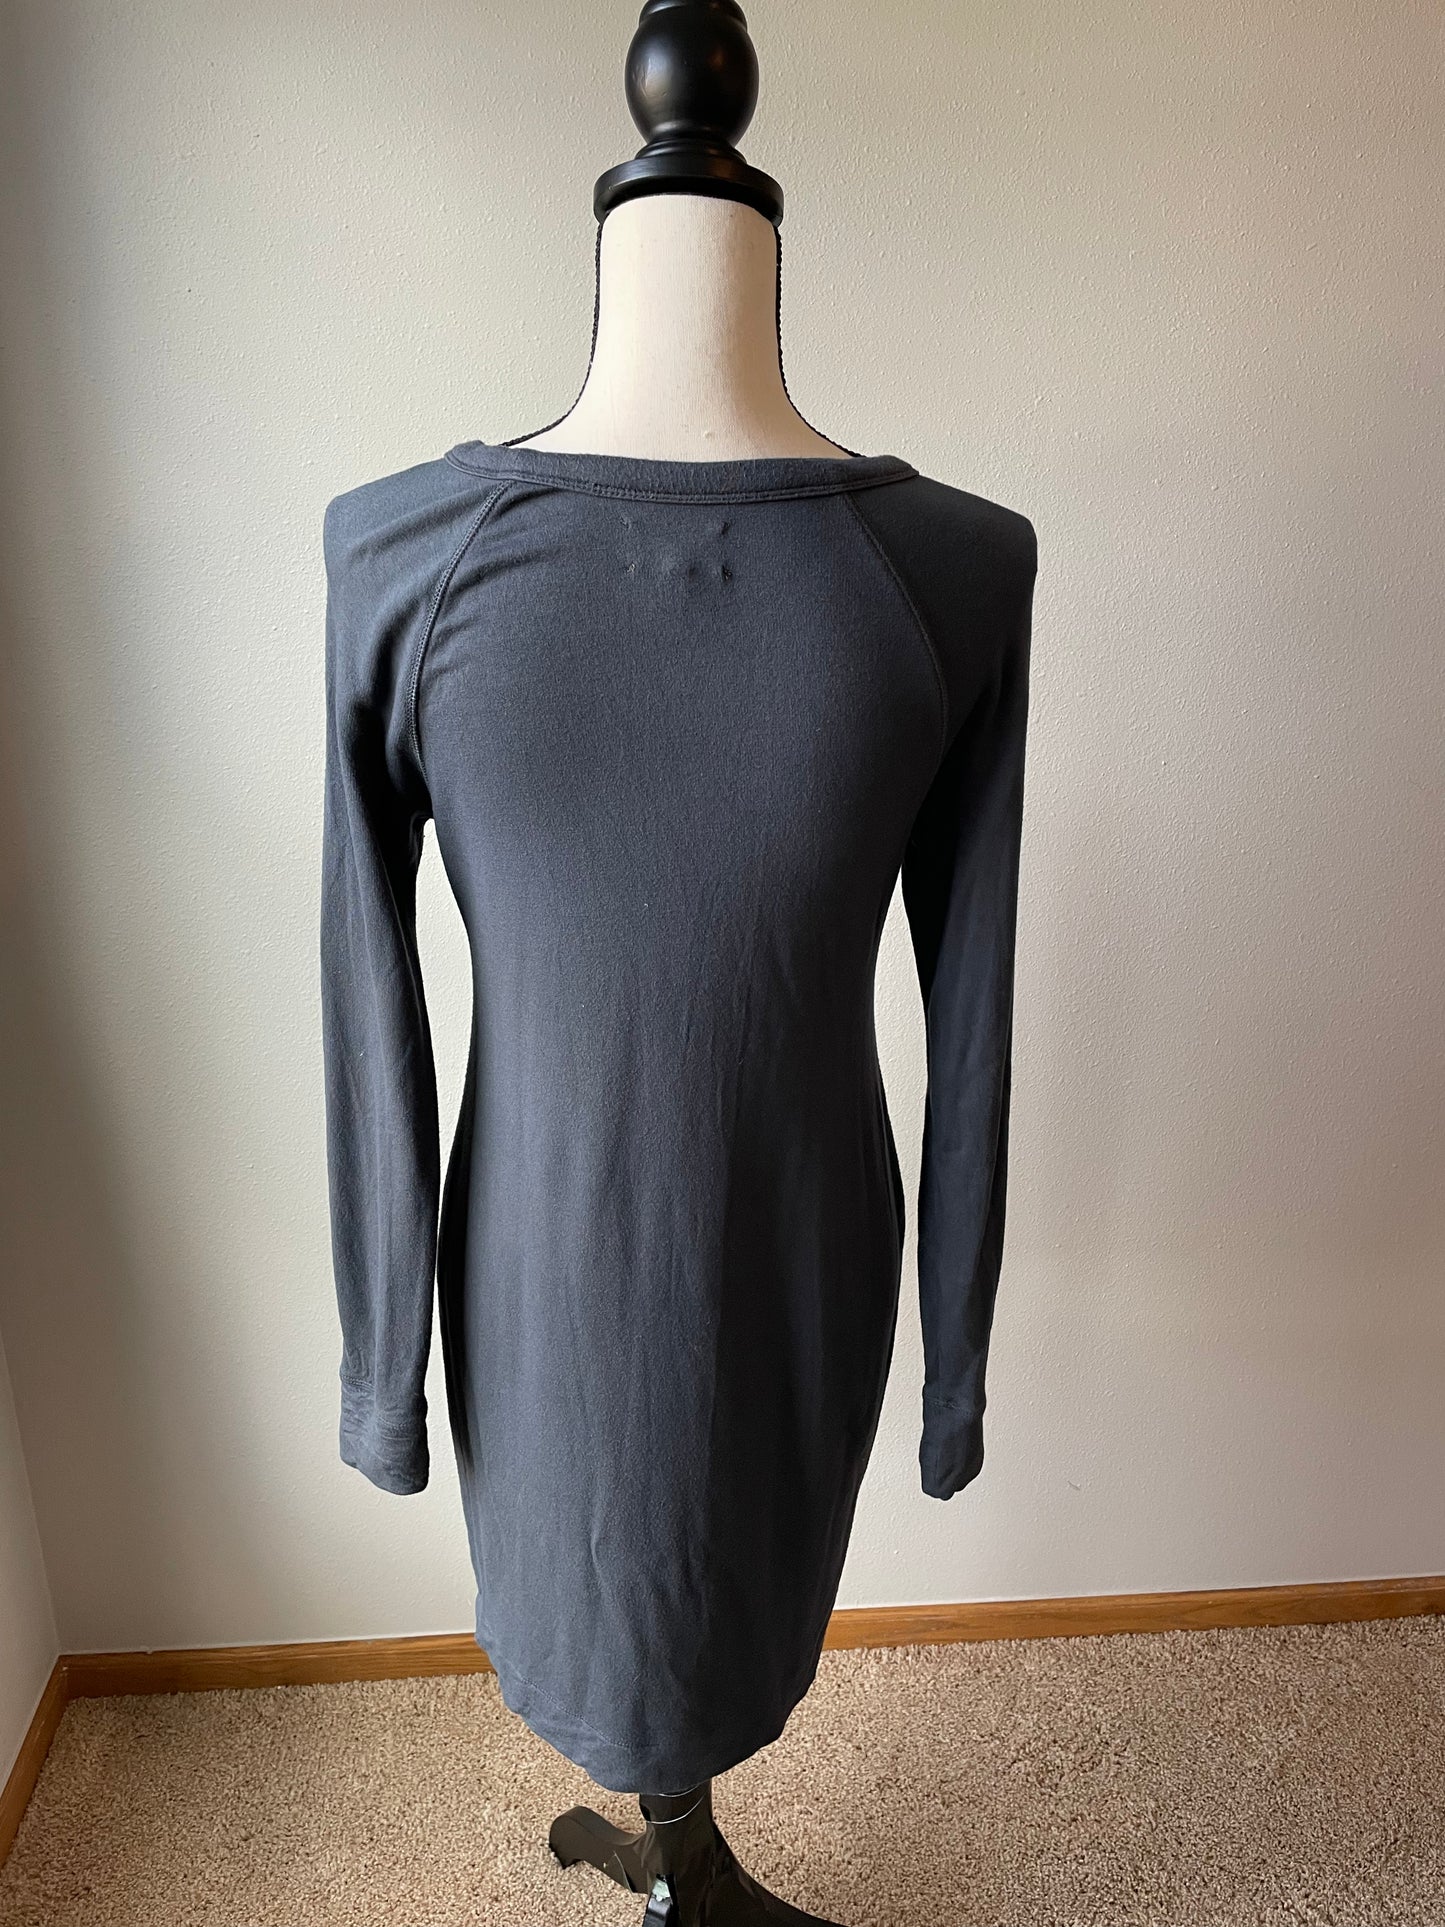 Lou & Grey Sweatshirt Dress (S)